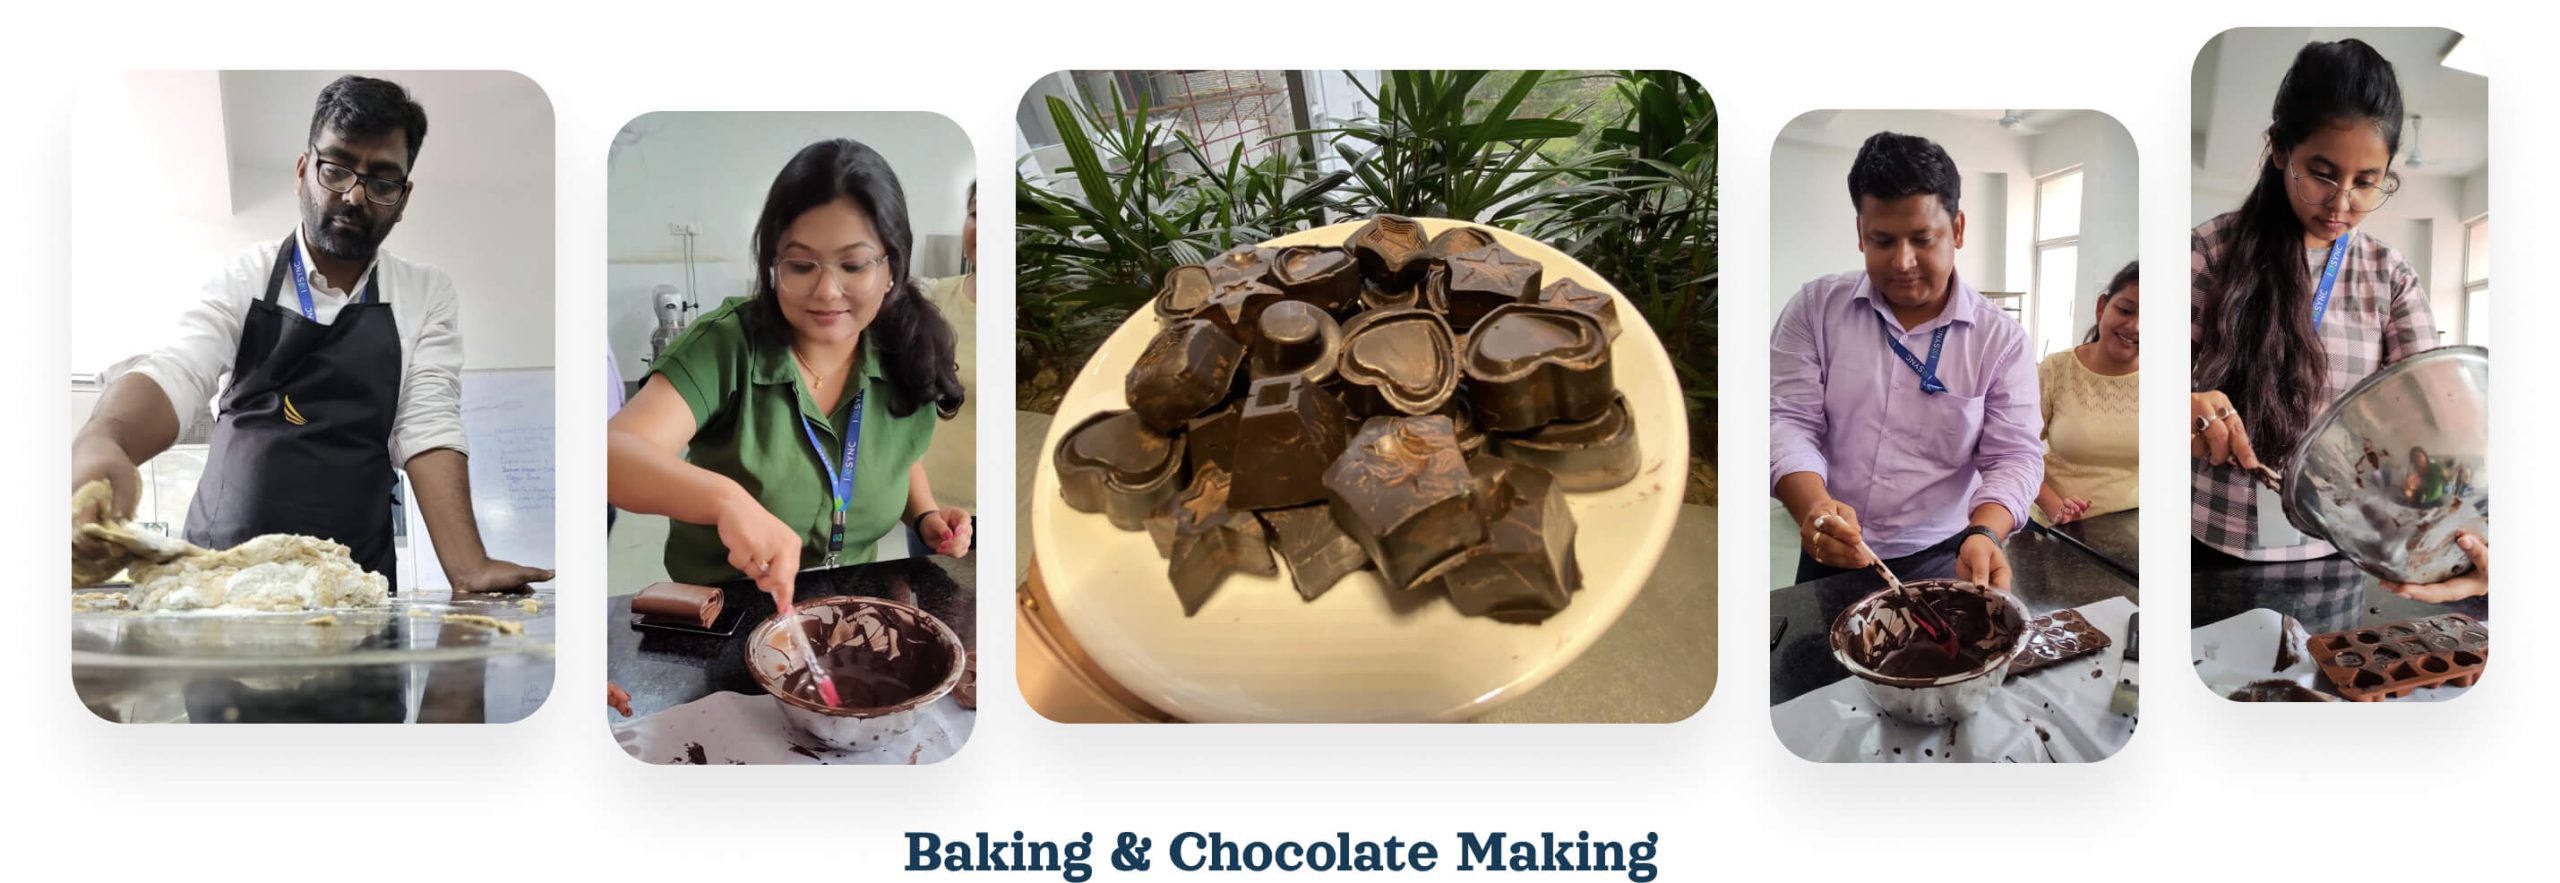 baking-chocolate-making copy